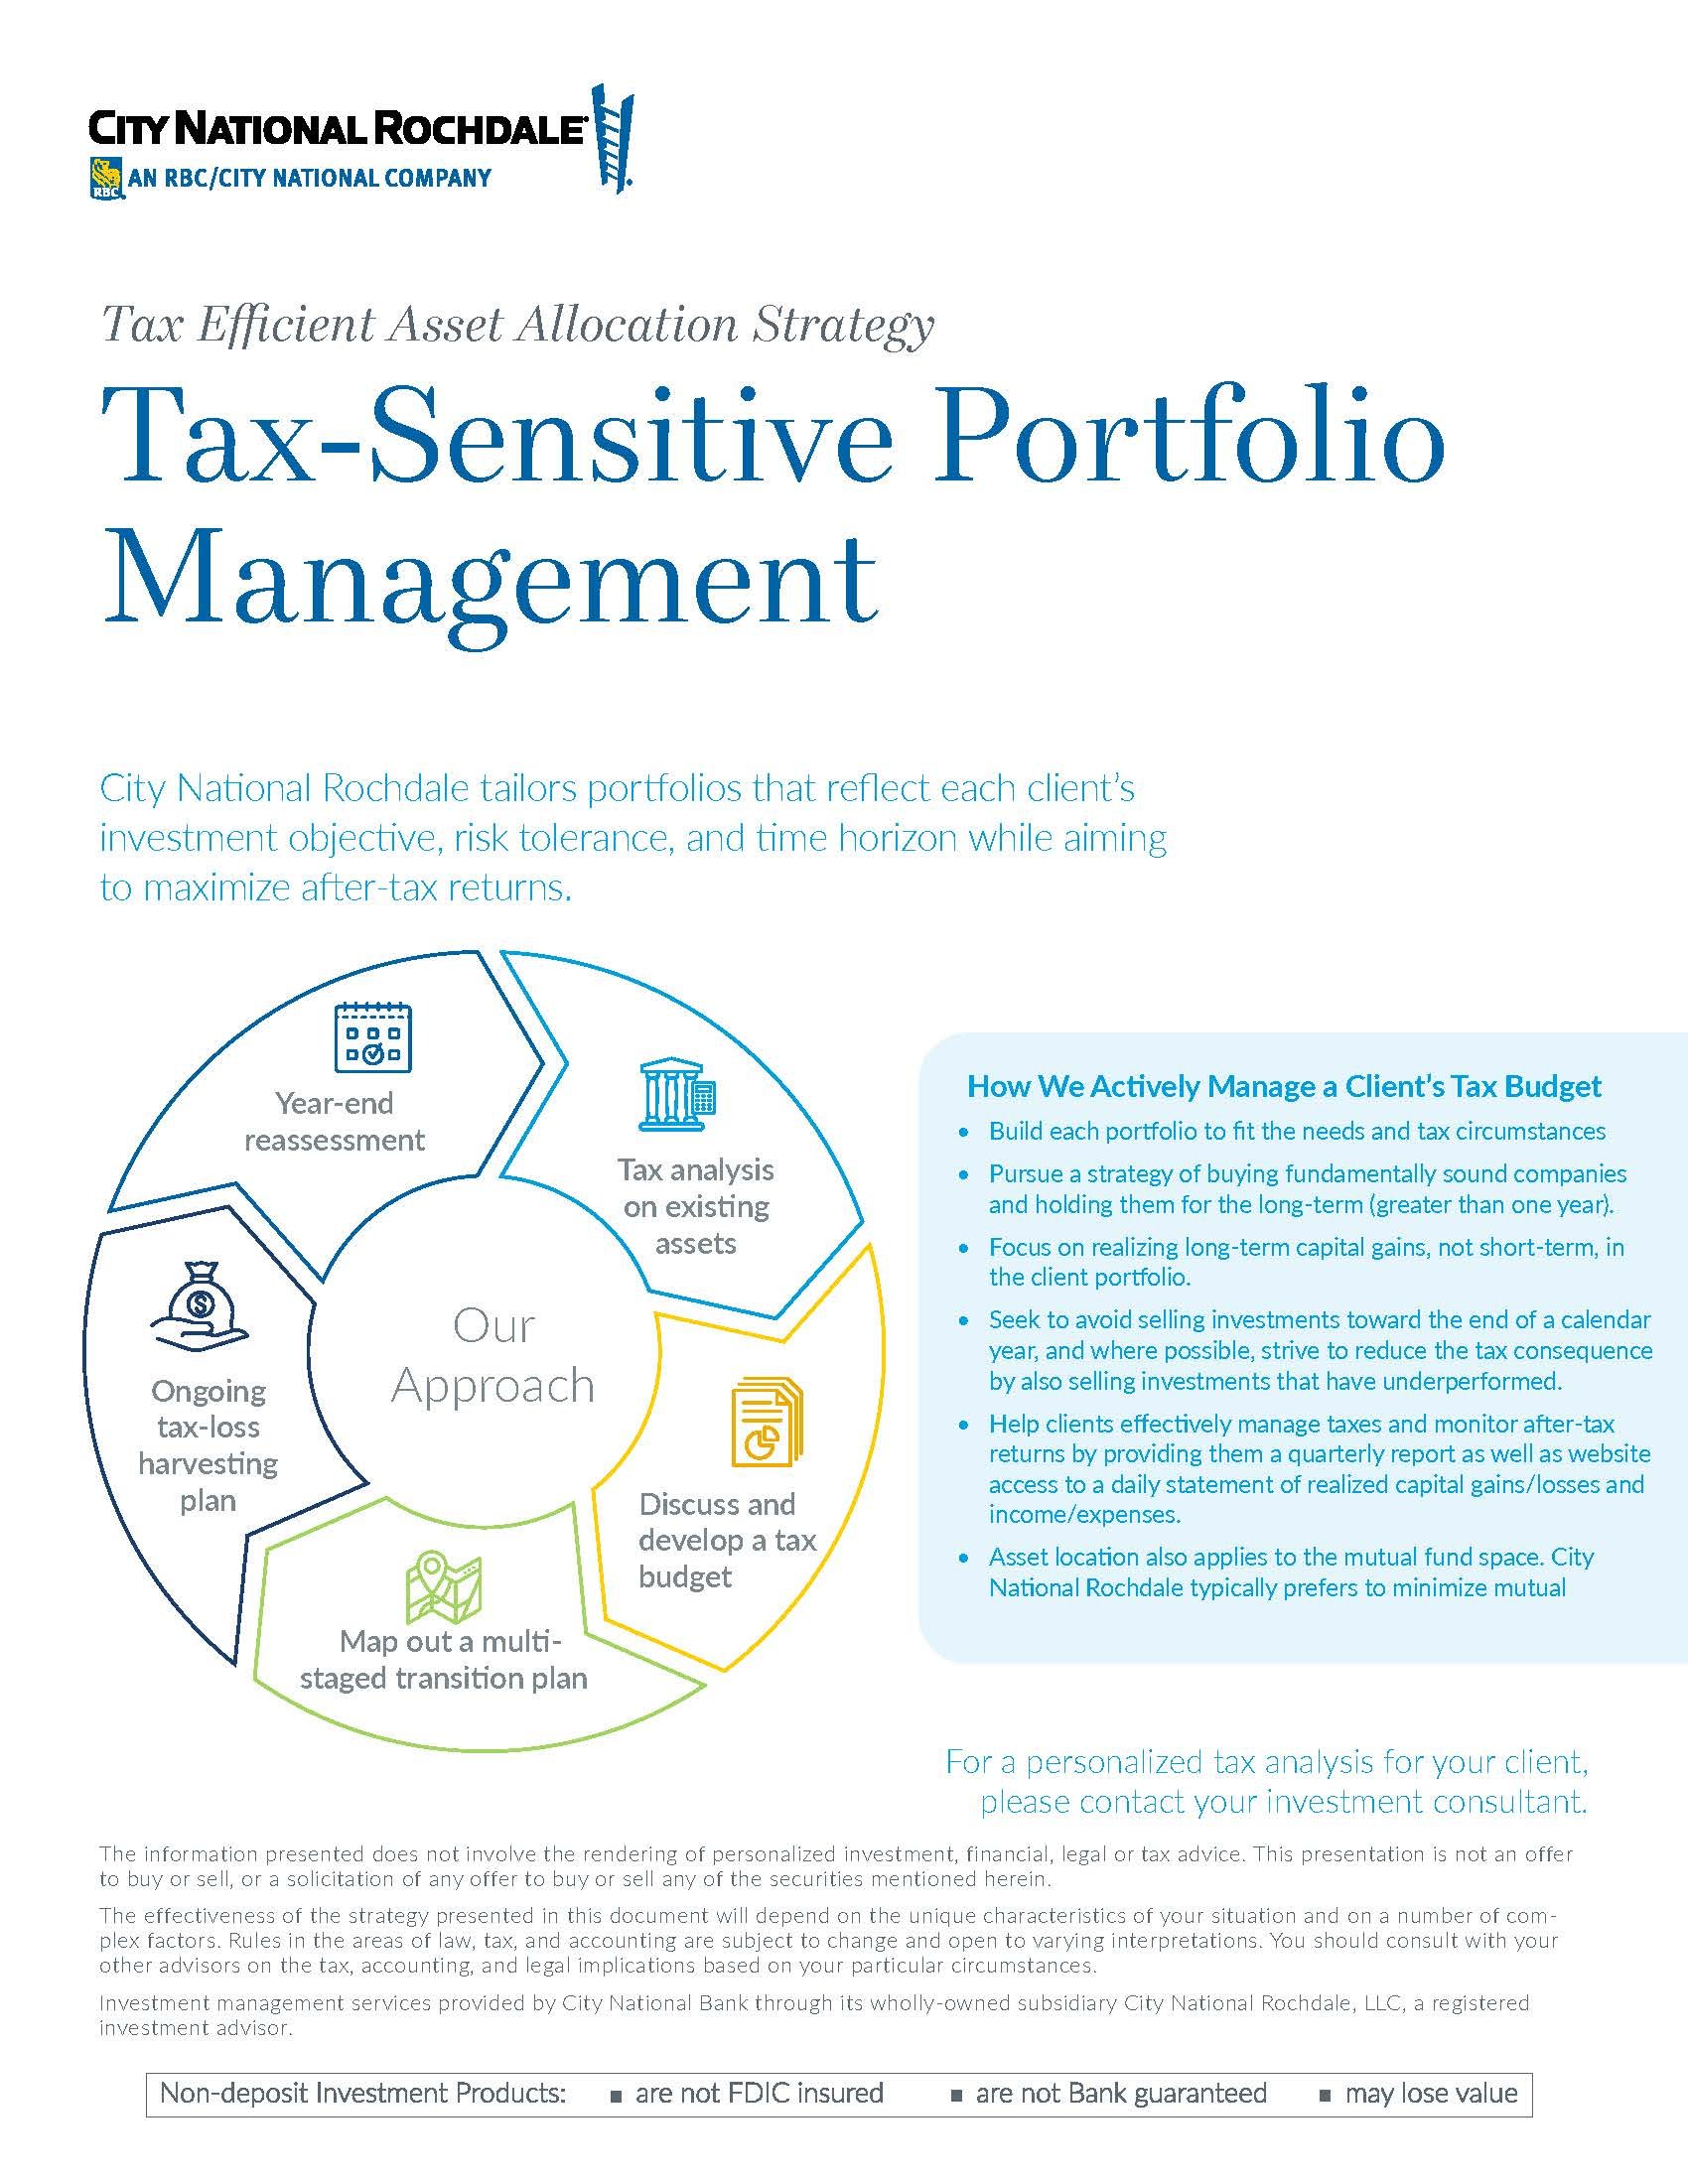 000714 Tax Sensative Portfolio Management.jpg